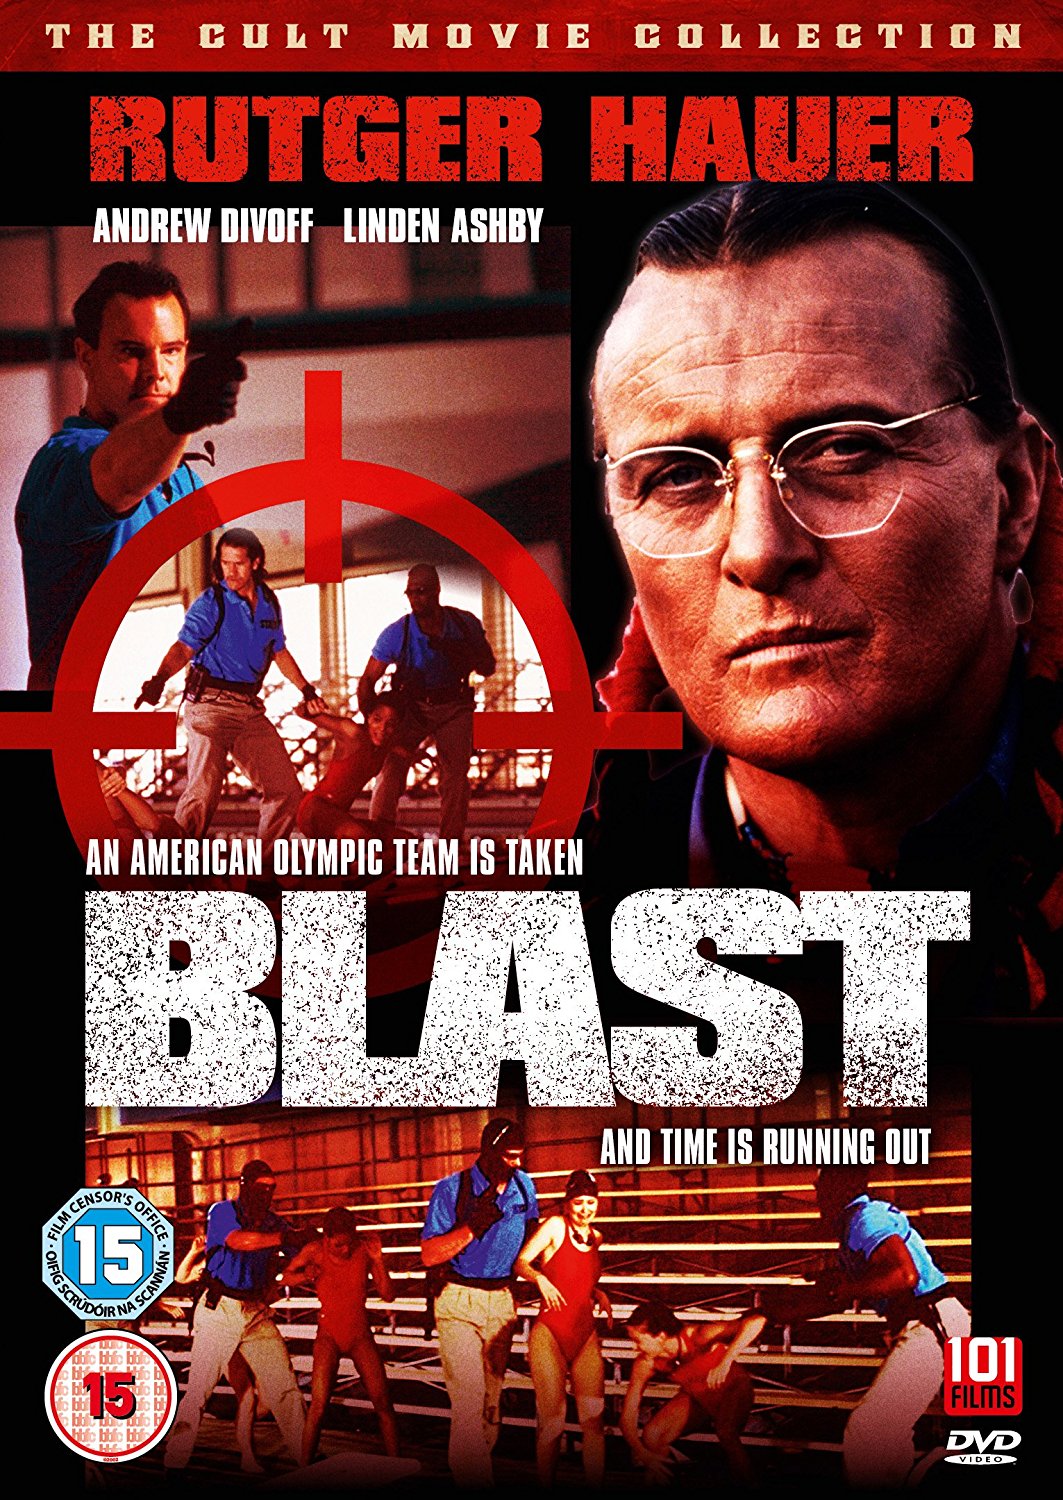 Blast (DVD)